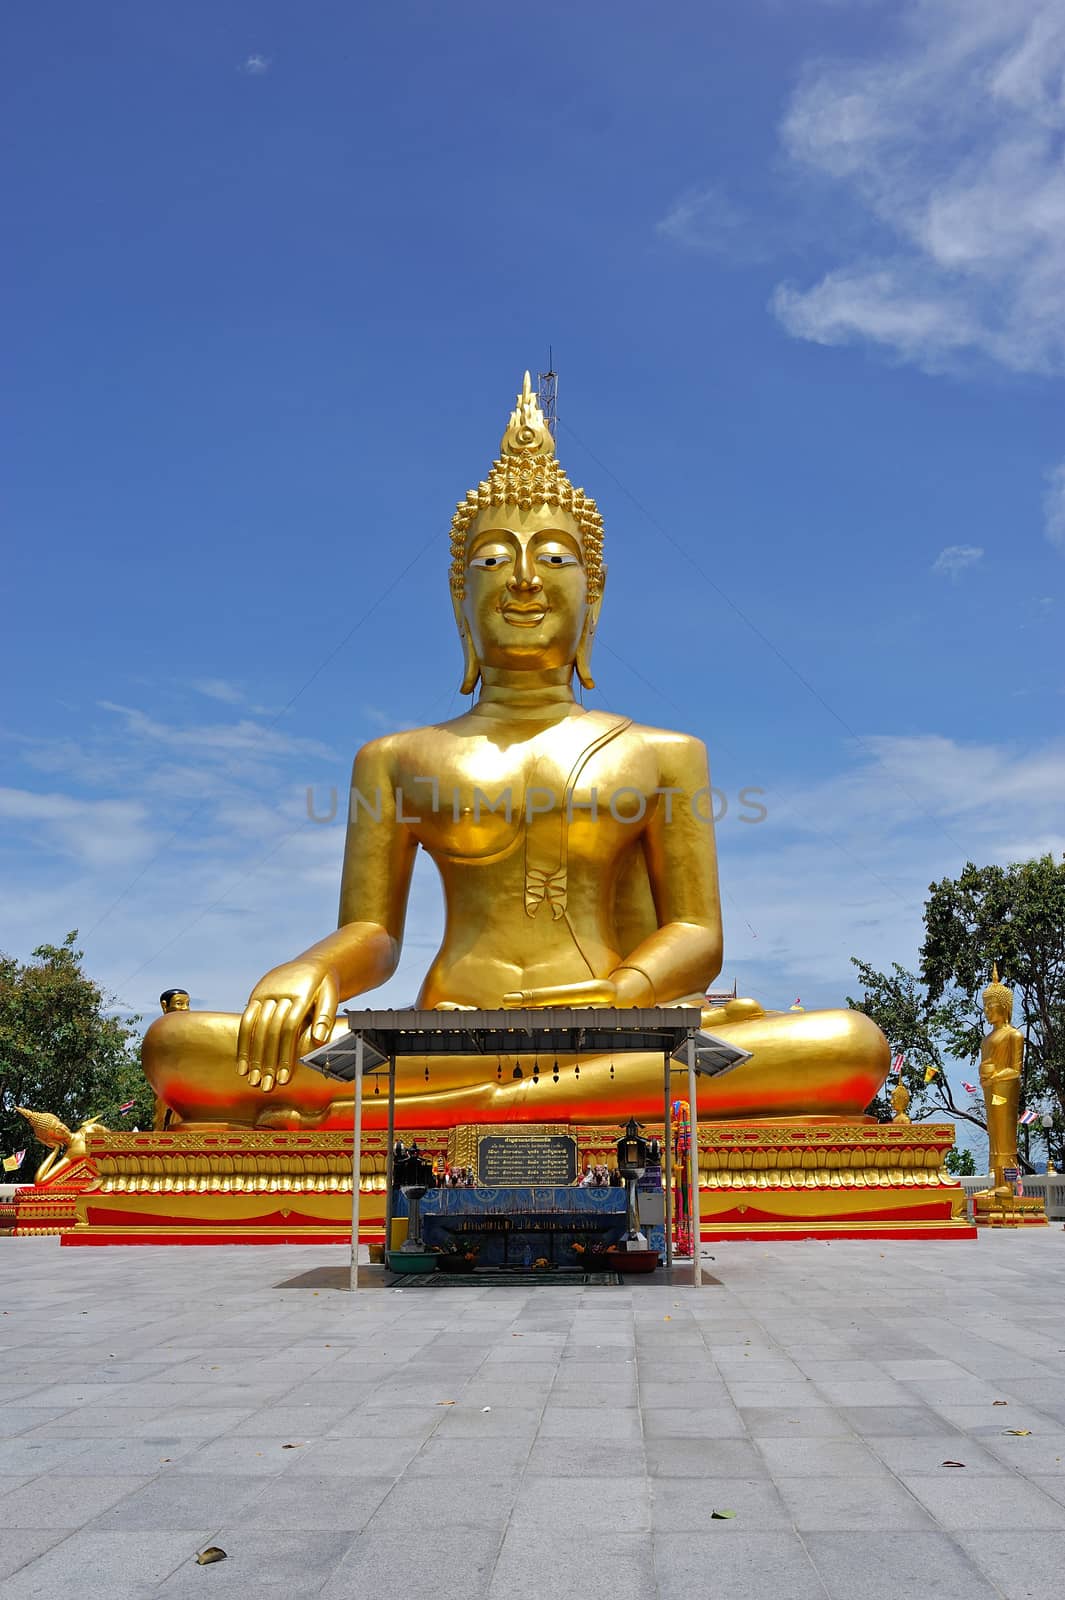 Big Buddha. Pattaya, Thailand. by think4photop